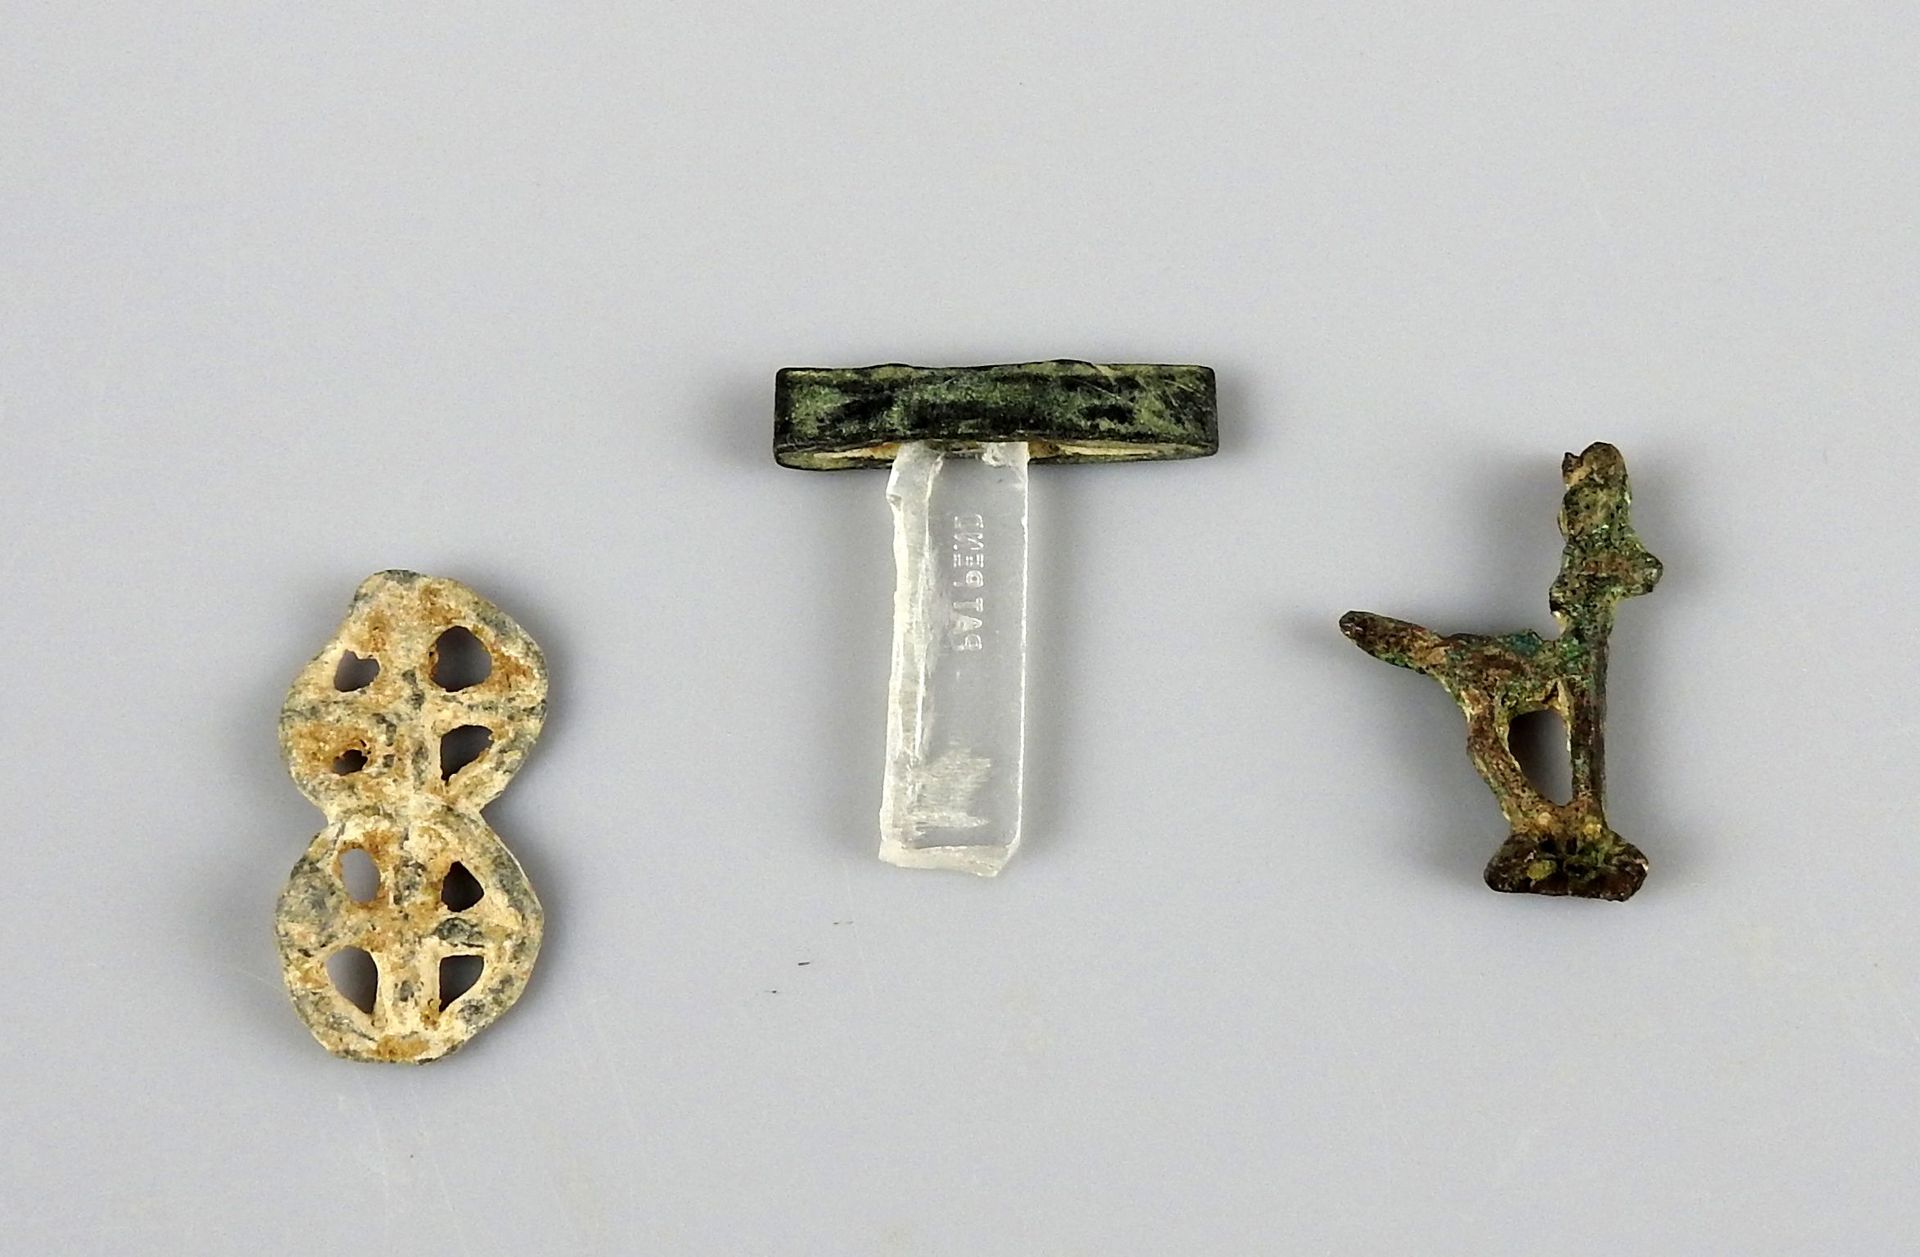 Null 一套三件套，包括一个卡普里德，一个双轮和一个小金匠锤子

青铜和铅

古代世界